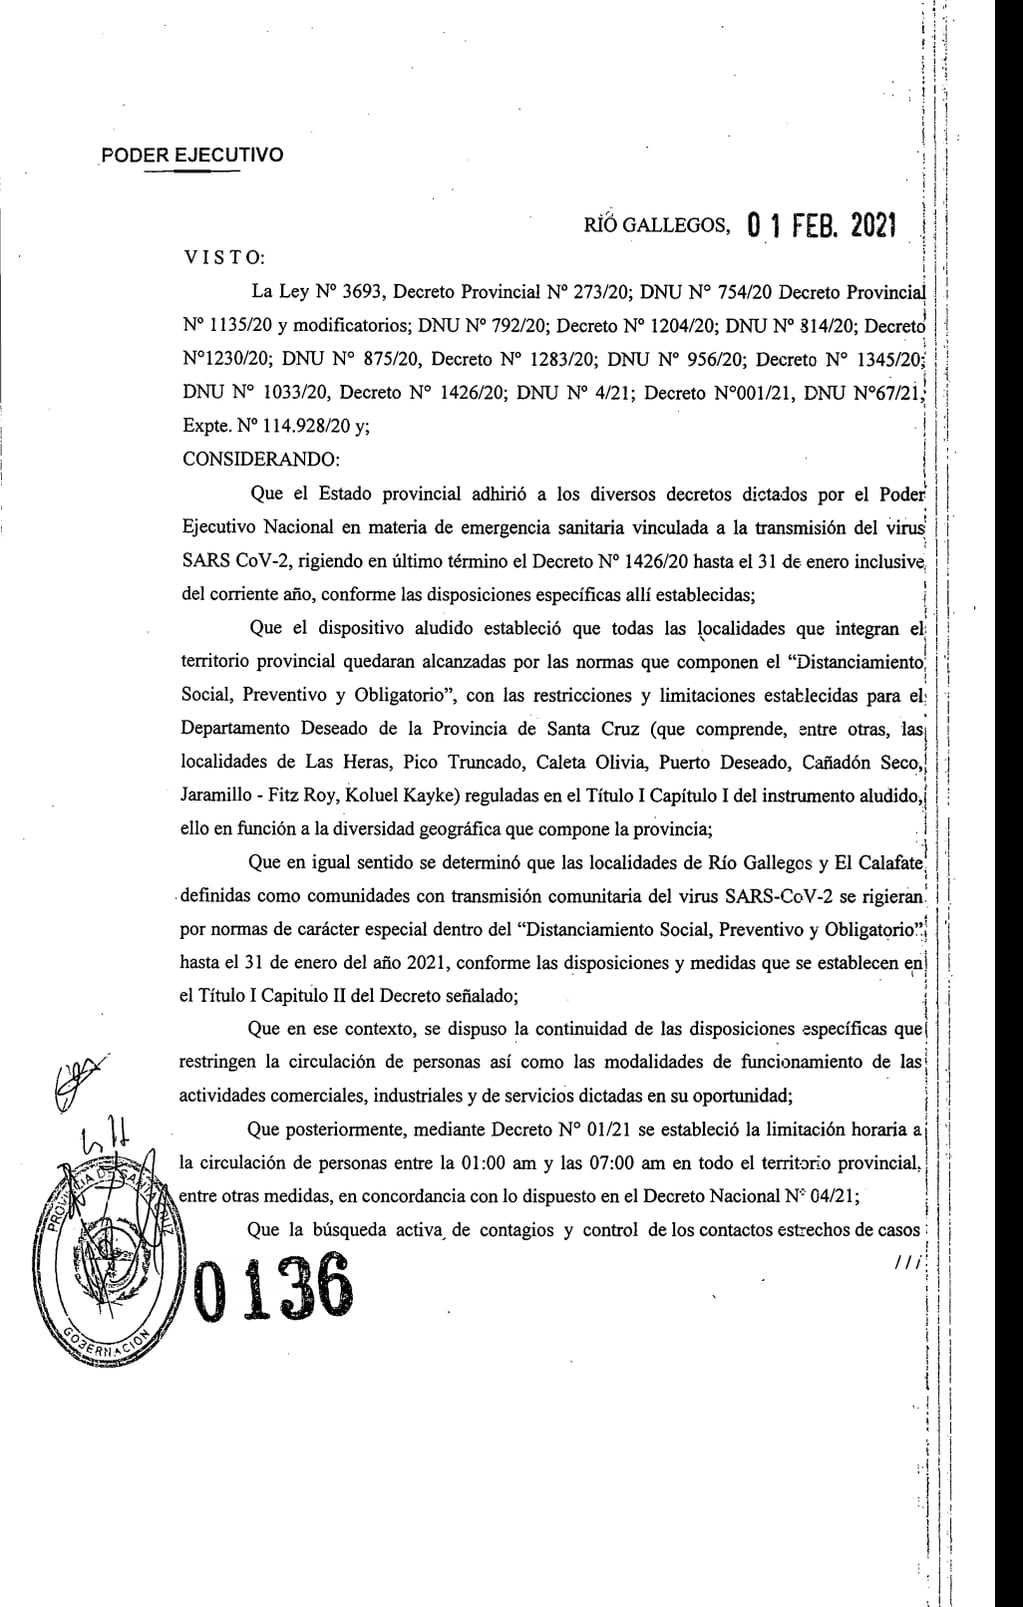 Decreto Provincial N°136/21